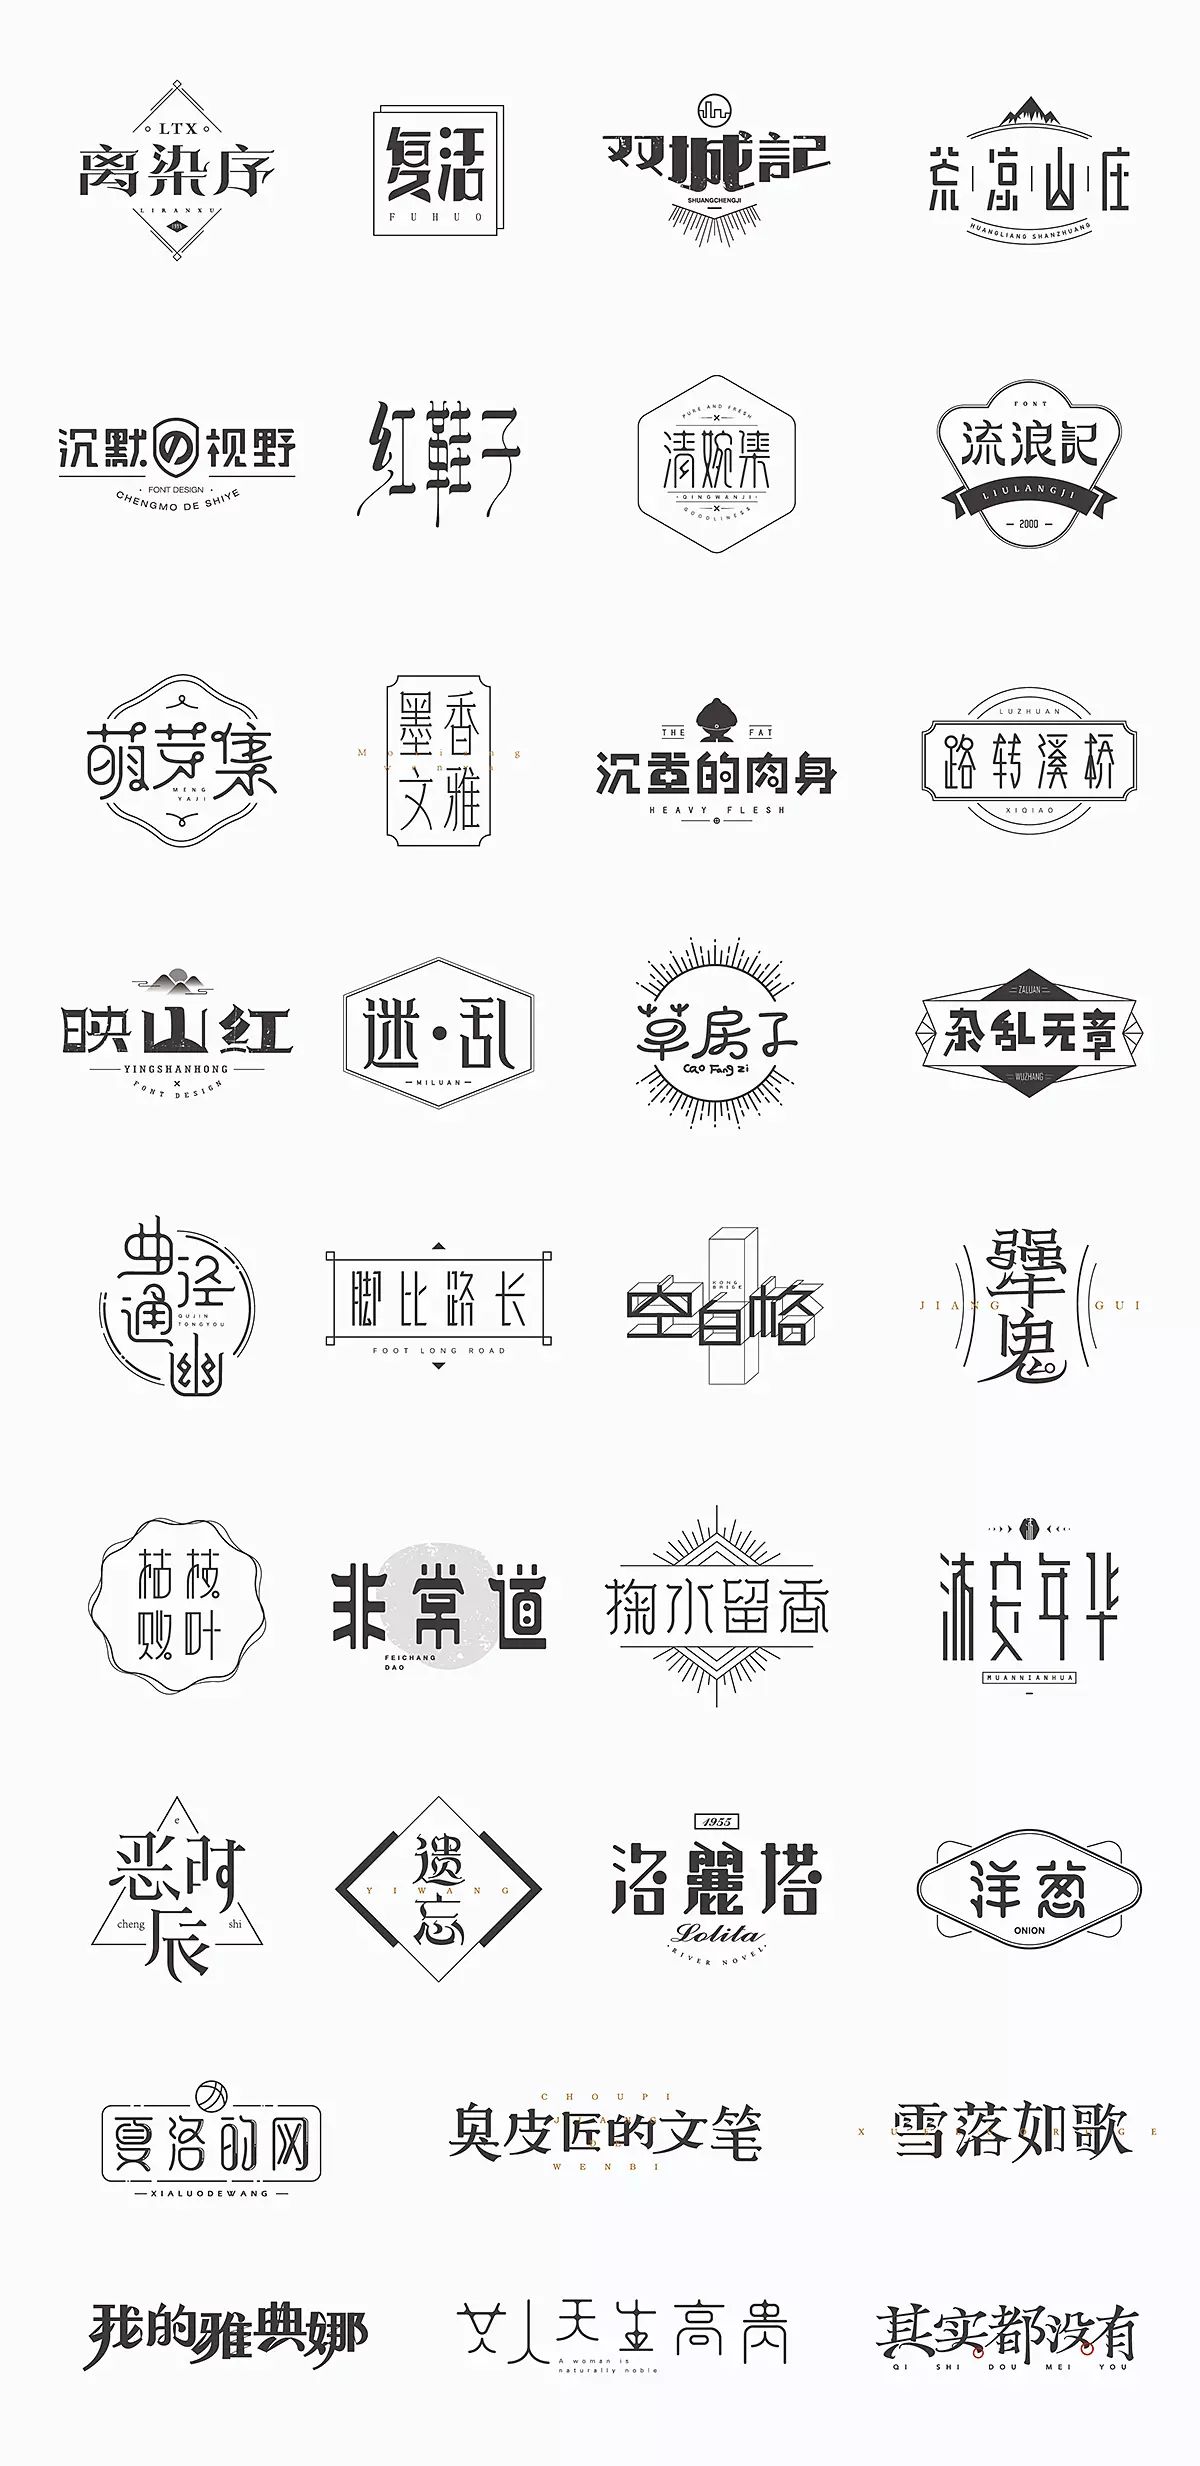 Beautiful! Master Chinese font logo photography appreciation